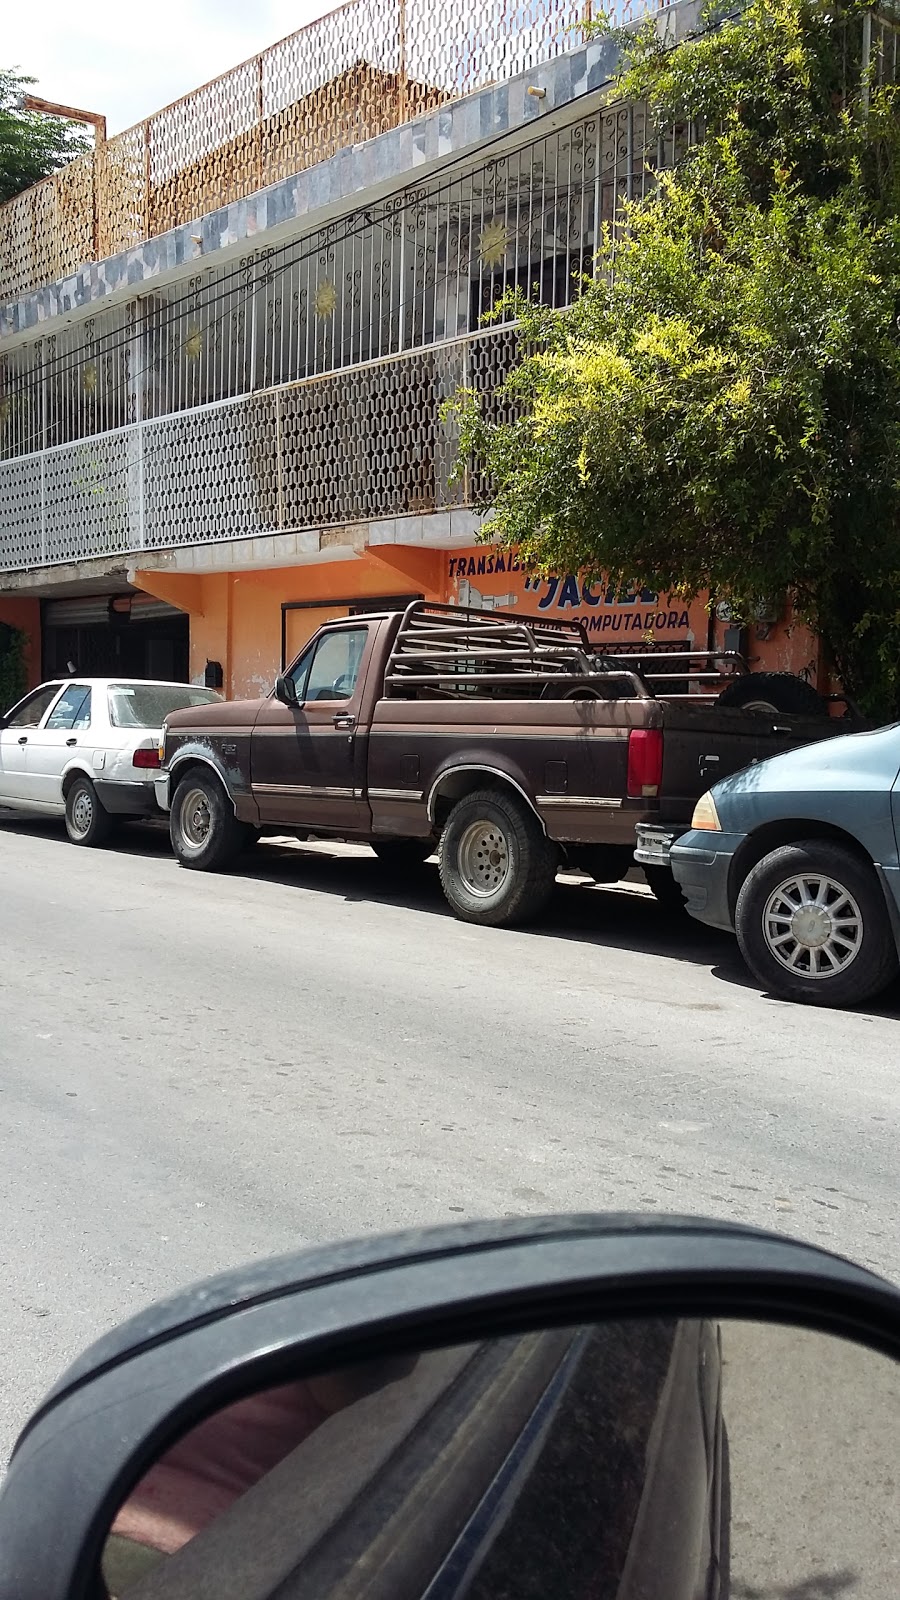 Transmisiones "Jaciel" | Calle Chihuahua 1844, Guerrero, 88240 Nuevo Laredo, Tamps., Mexico | Phone: 867 714 6384